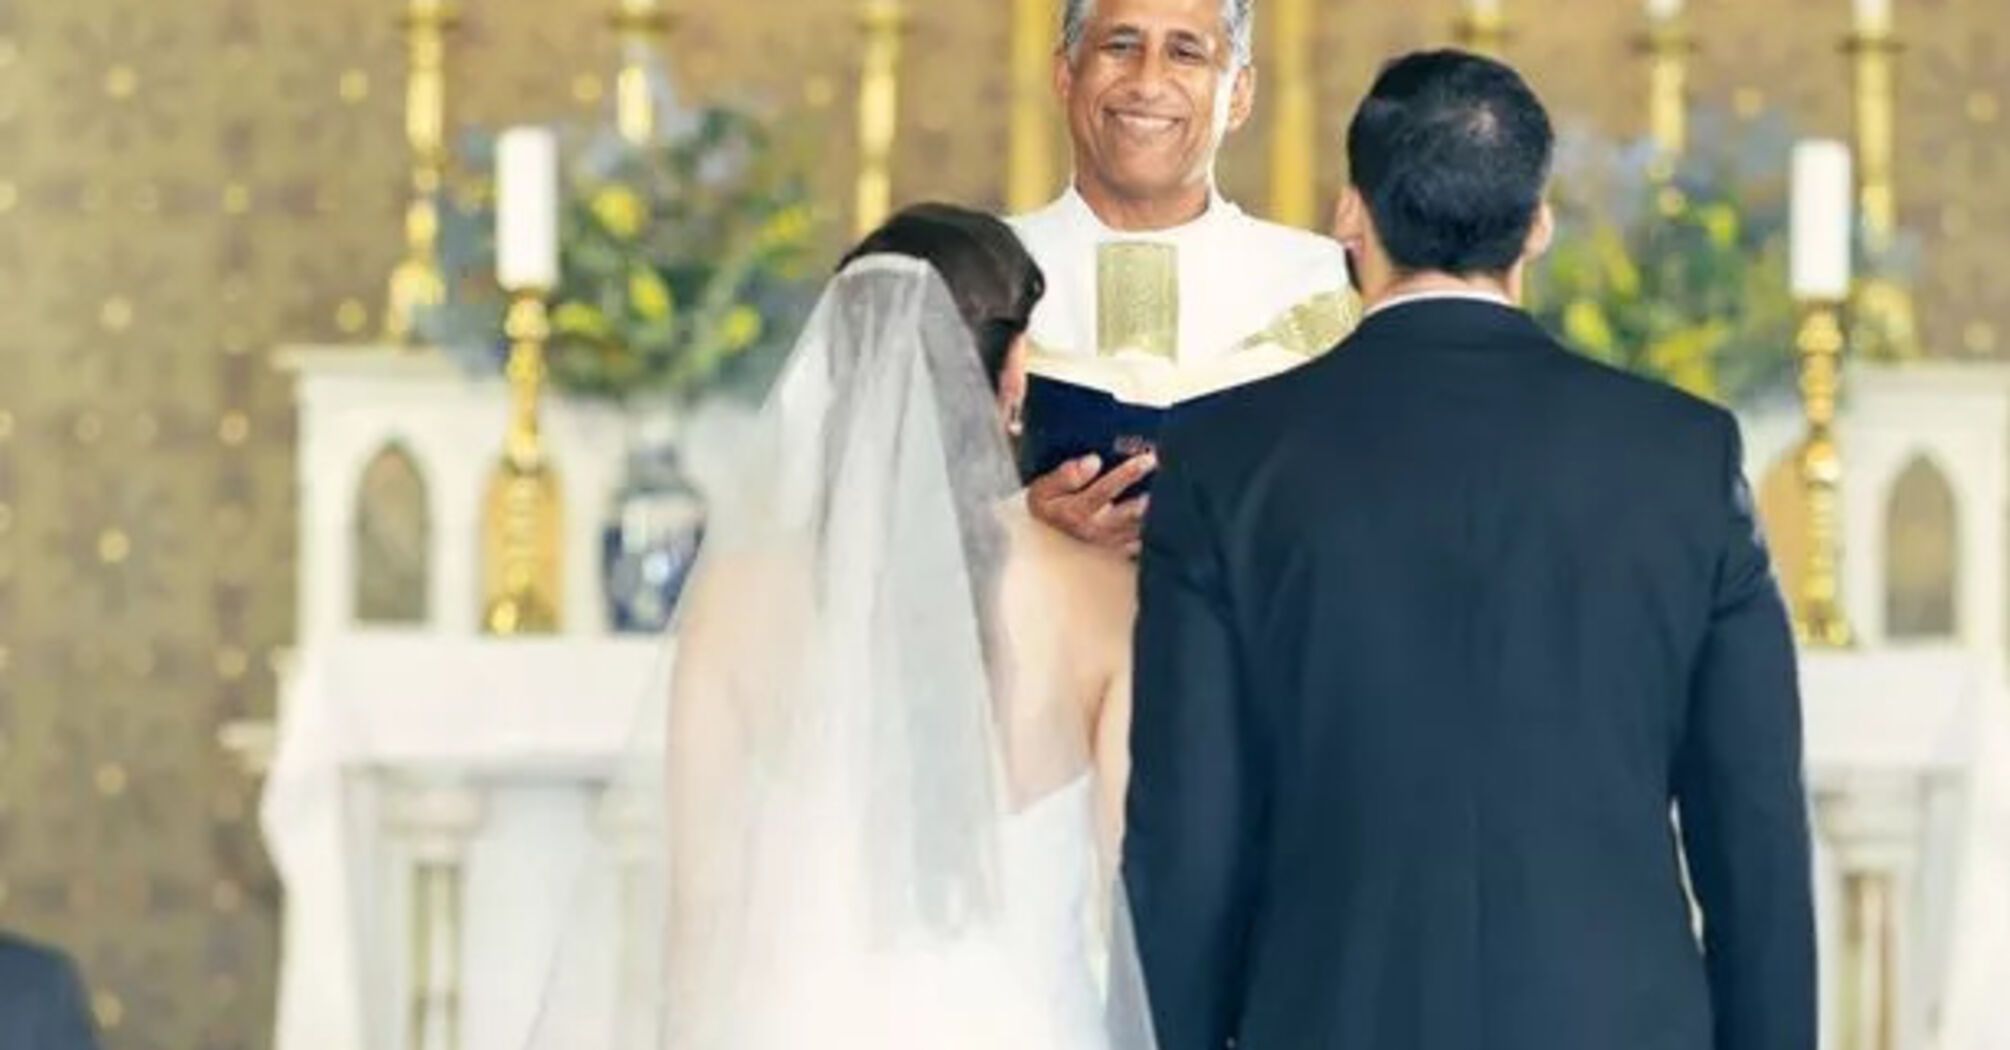 Drunk priest ruins couple's wedding